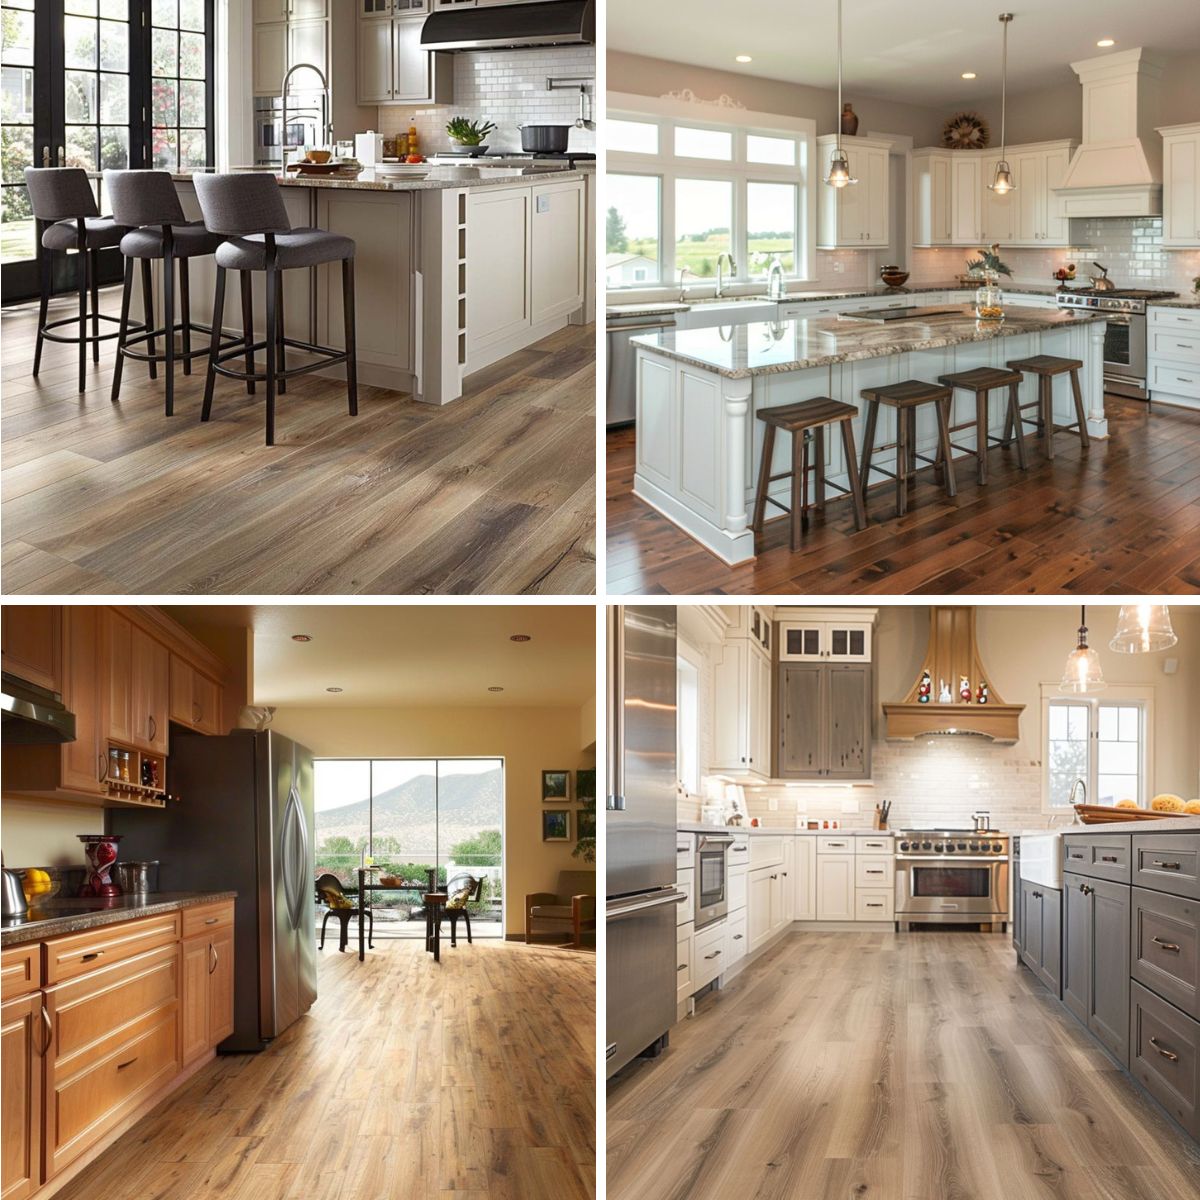 different kitchen designs with pergo laminated floor